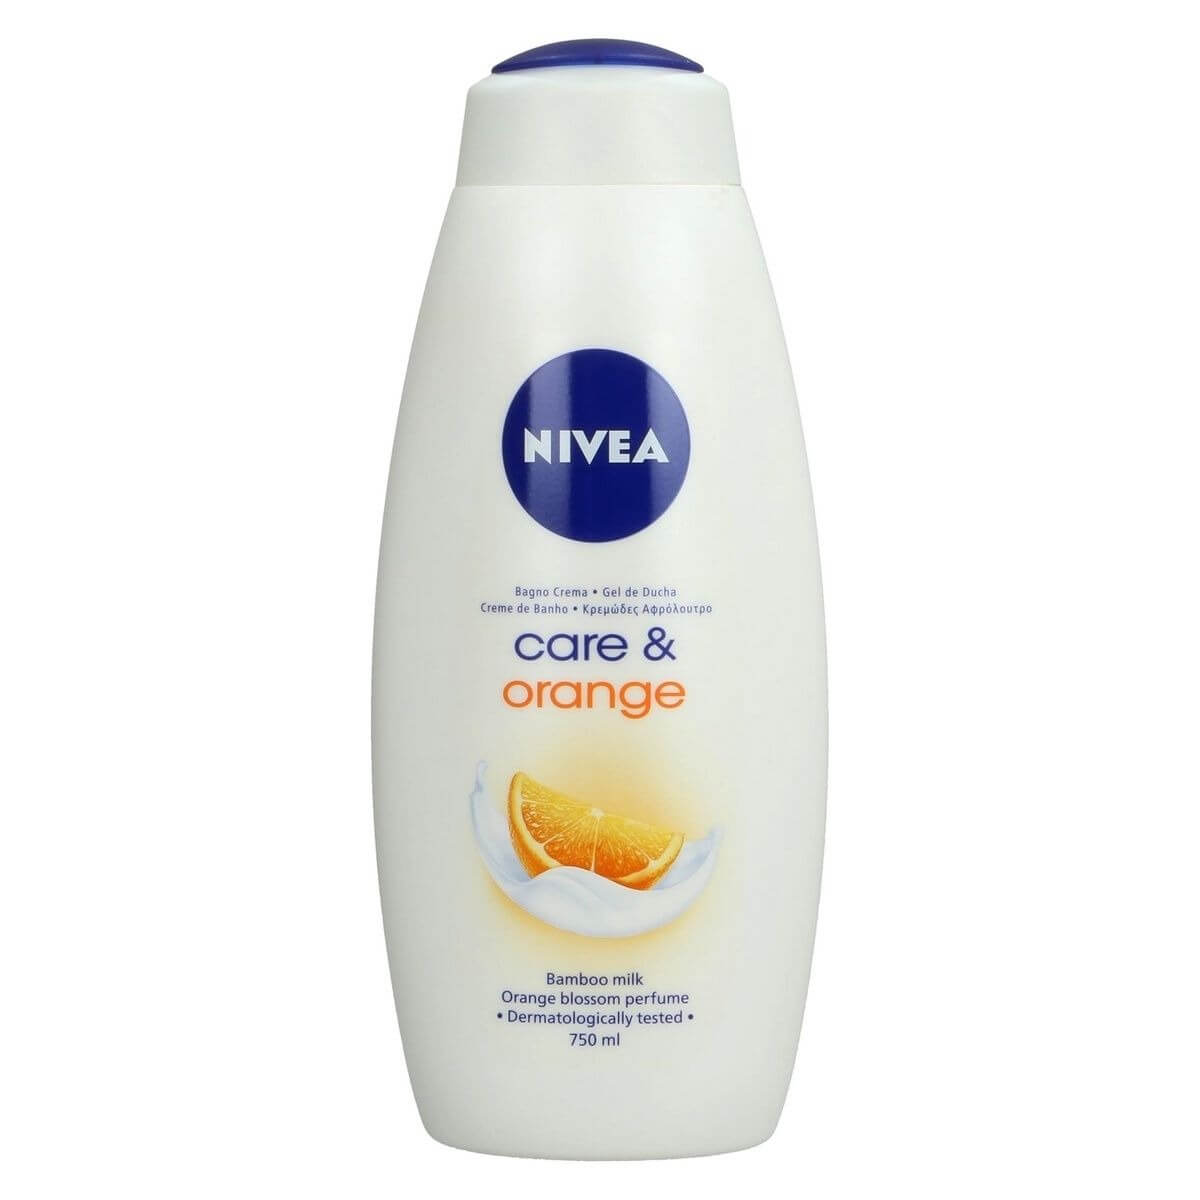 1591786727nivea-care-orange-shower-cream-750-ml.jpg